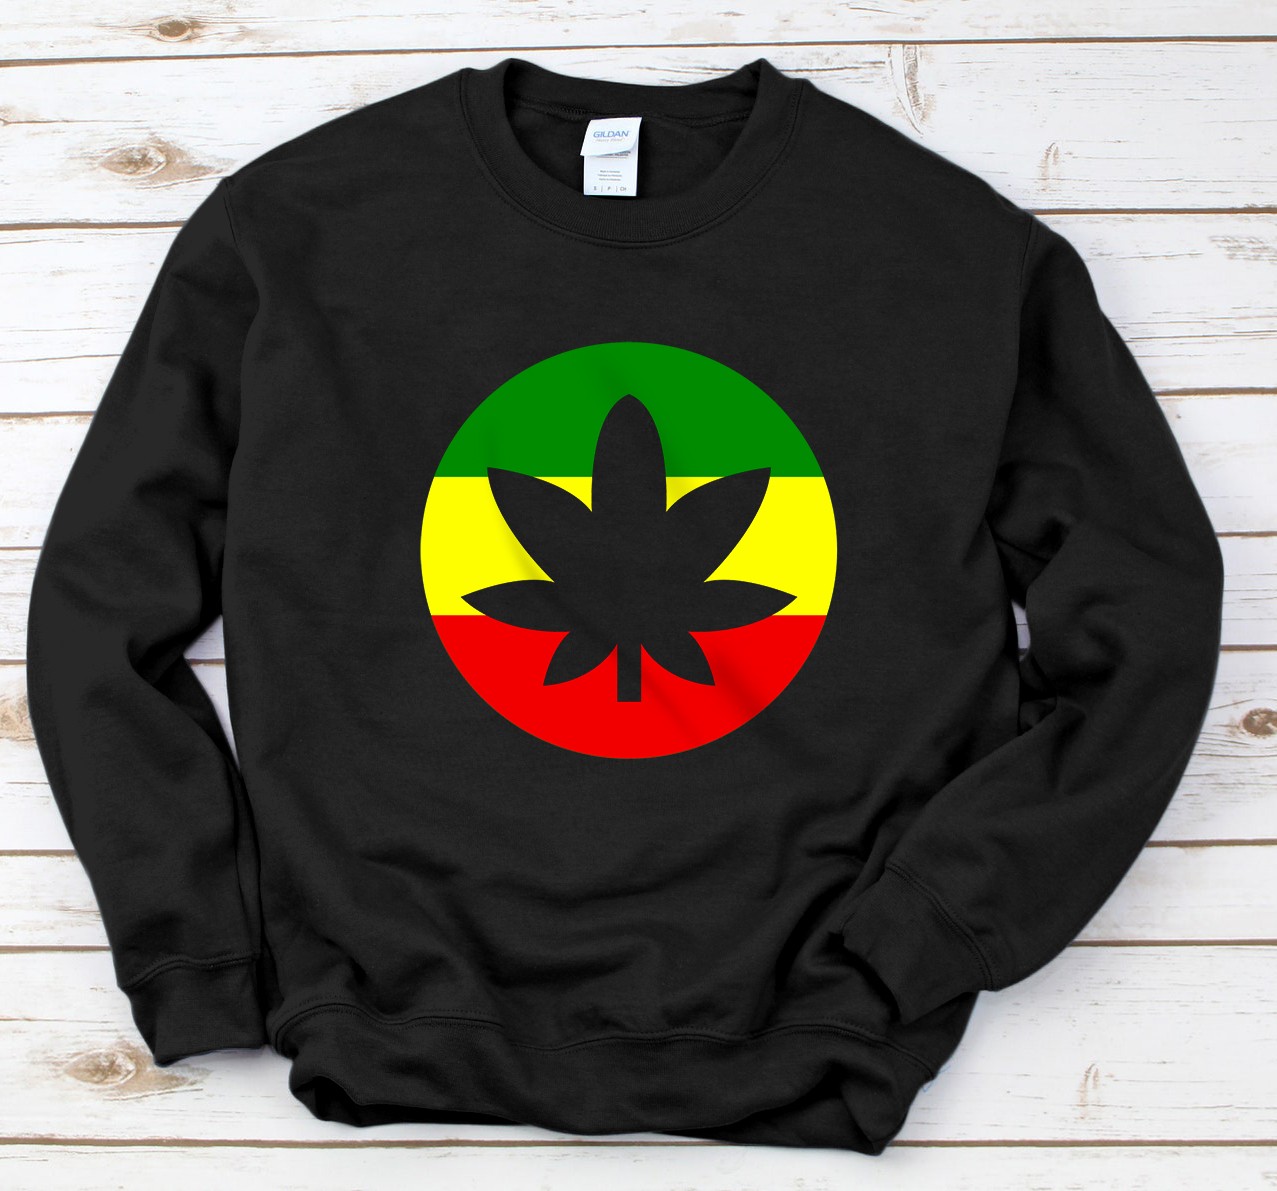 Personalized 420 cannabis rasta flag marijuana Sweatshirt